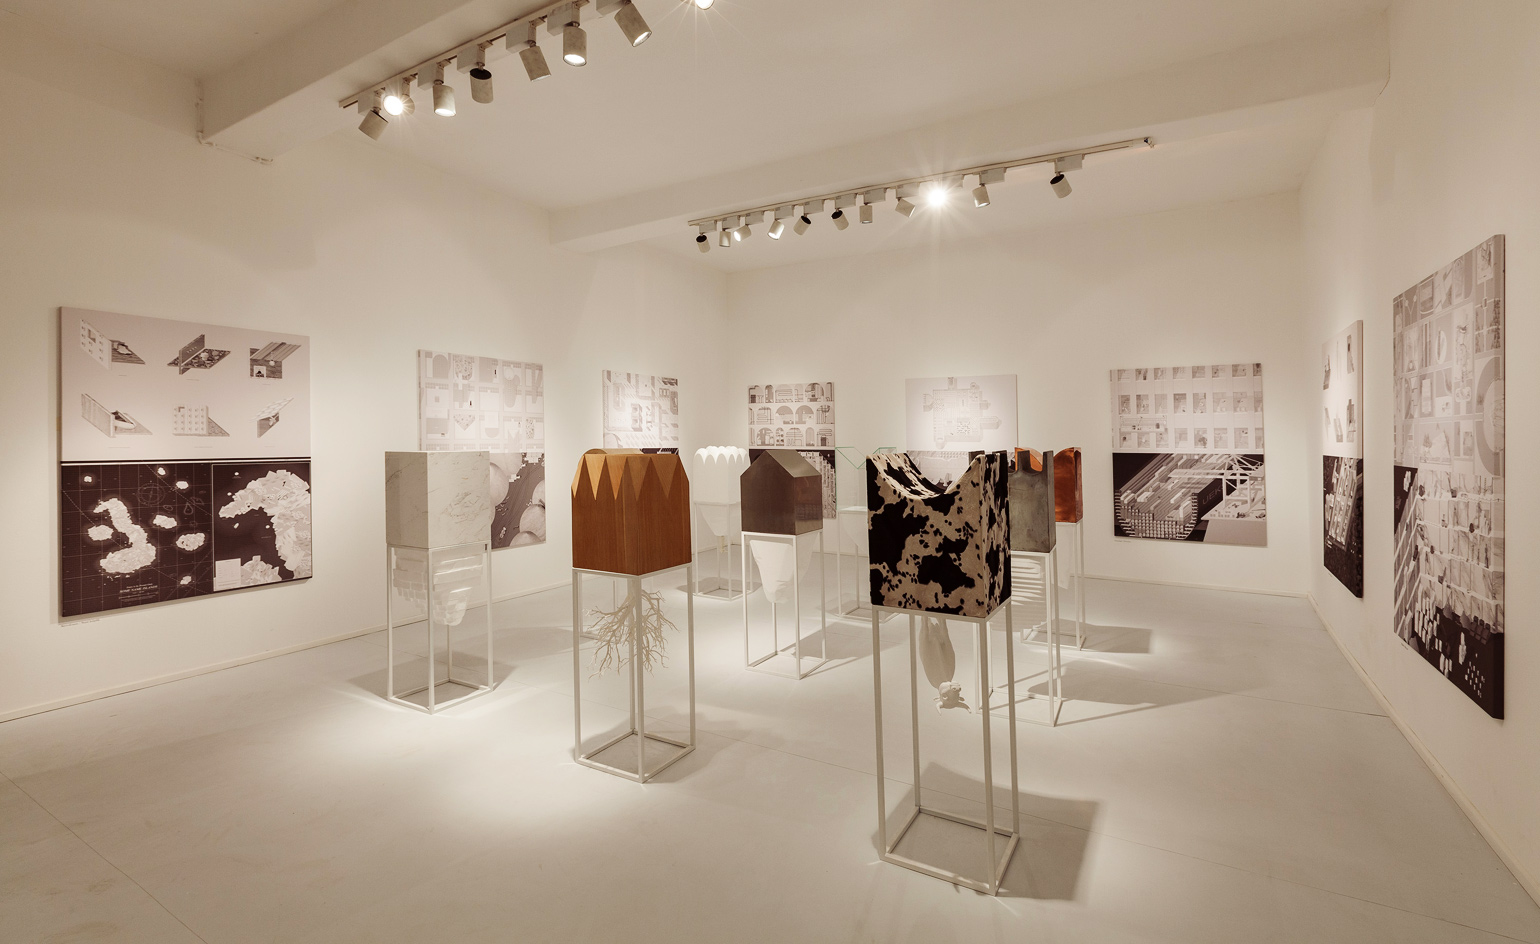 Nine Islands Exhibit at the 2016 Istanbul Design Biennale